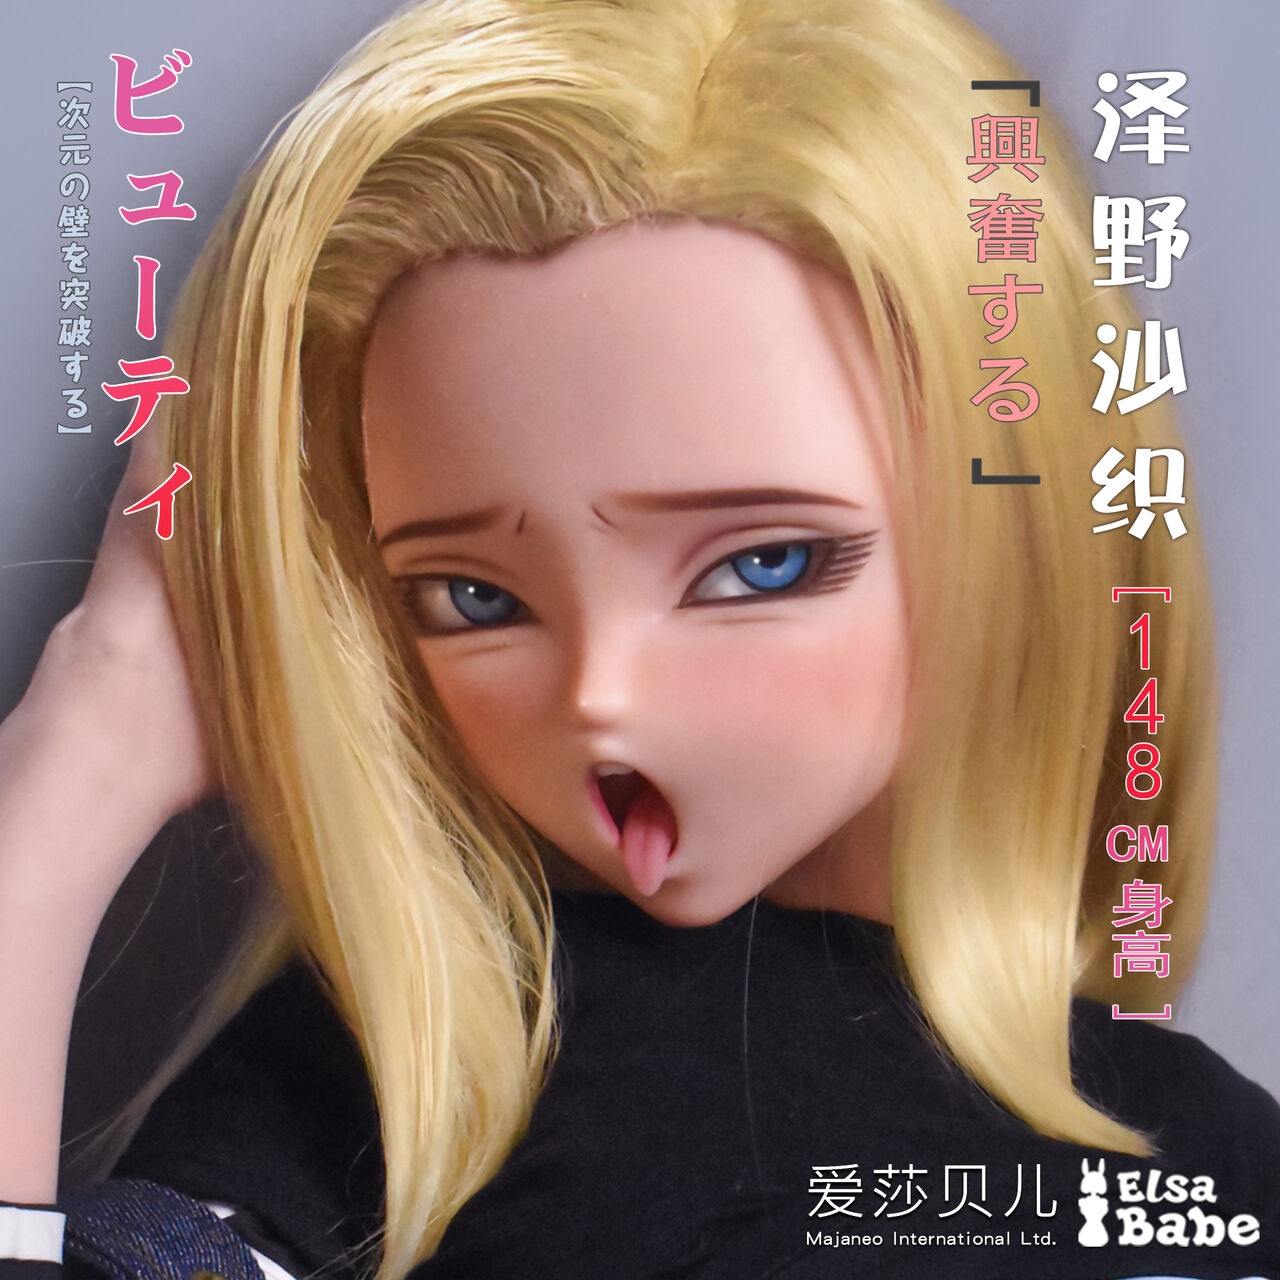 Elsa Babe-148 AHR002 Sawano Saori - New Doll Released 0